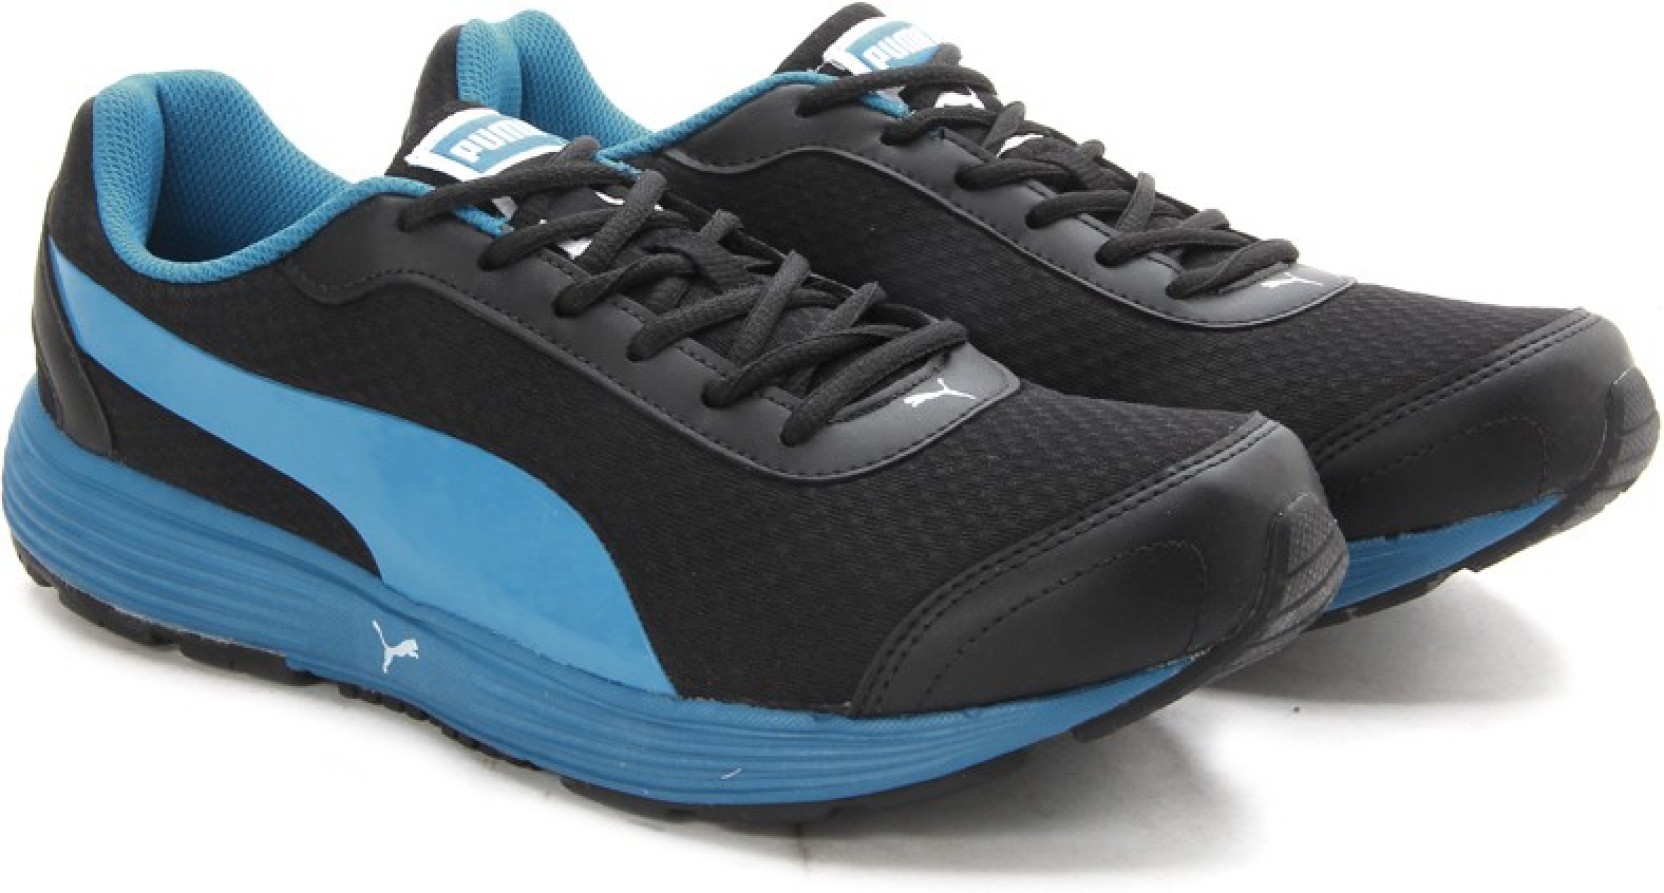 Puma Reef Fashion DP Running Shoes - Buy black-blue Jewel-white Color ...